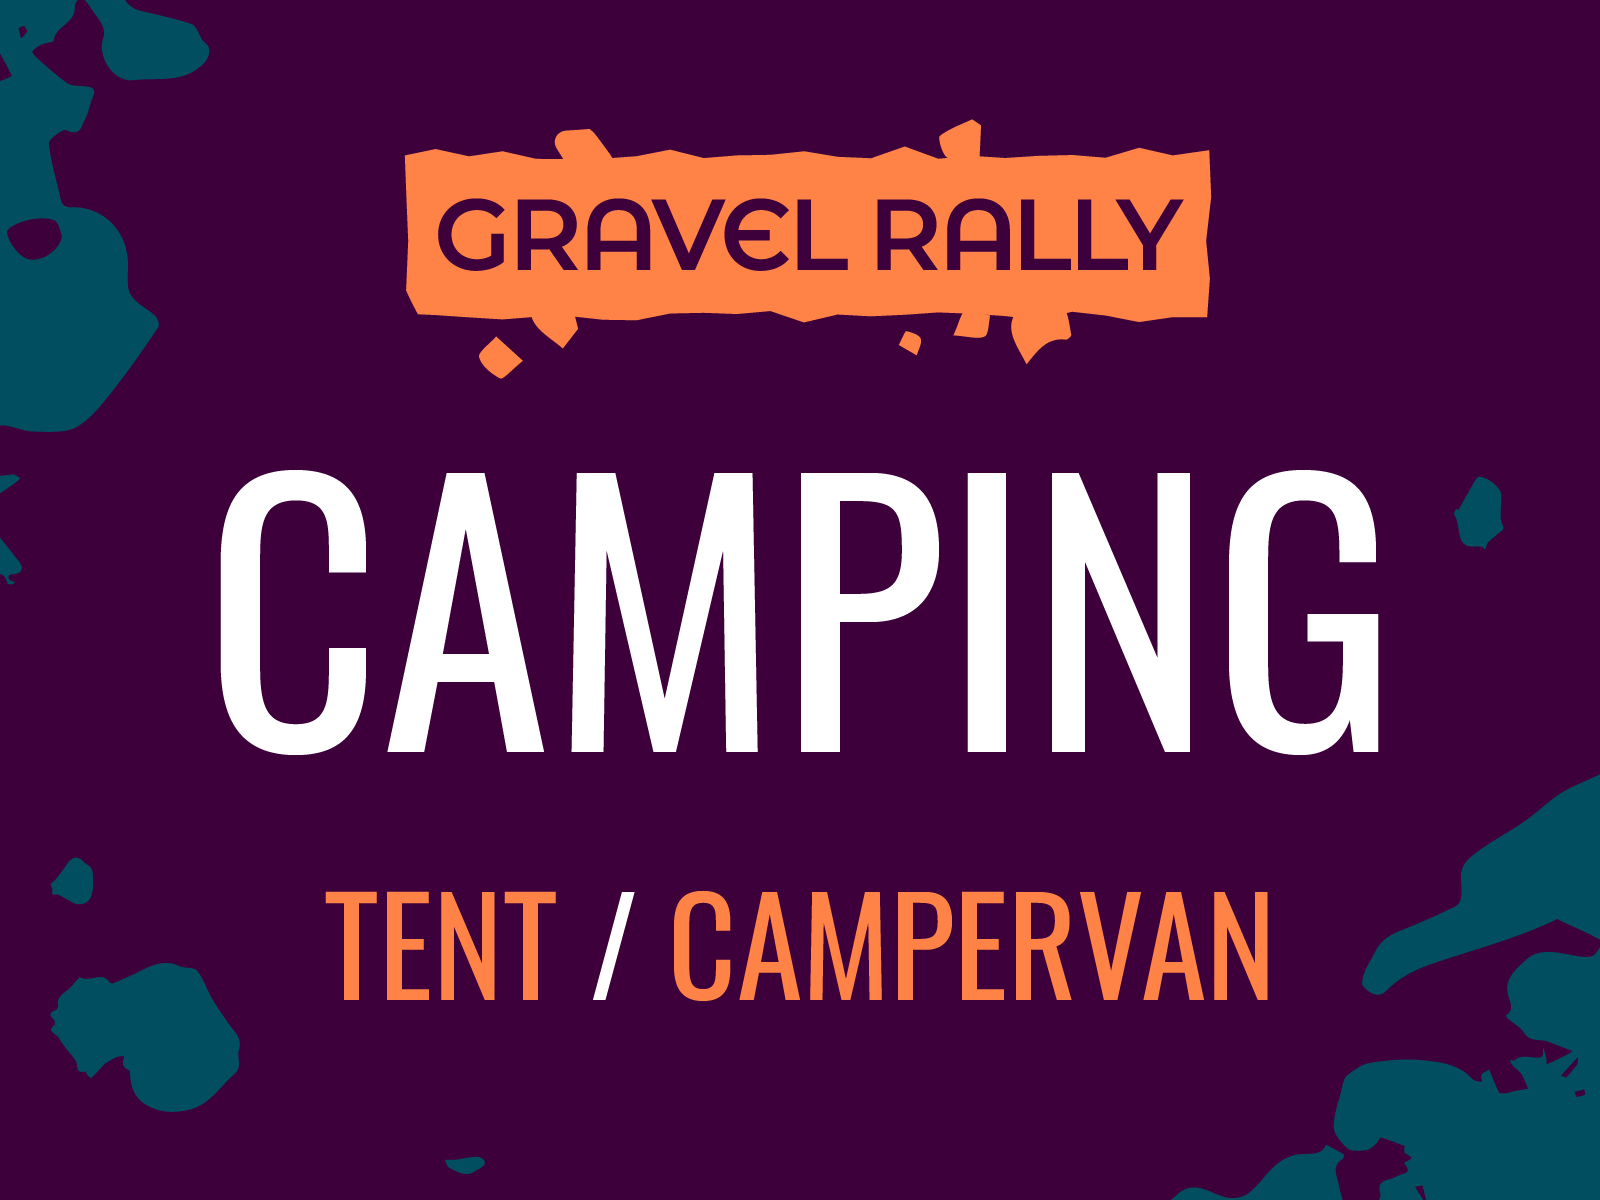 Gravel Rally CAMPING